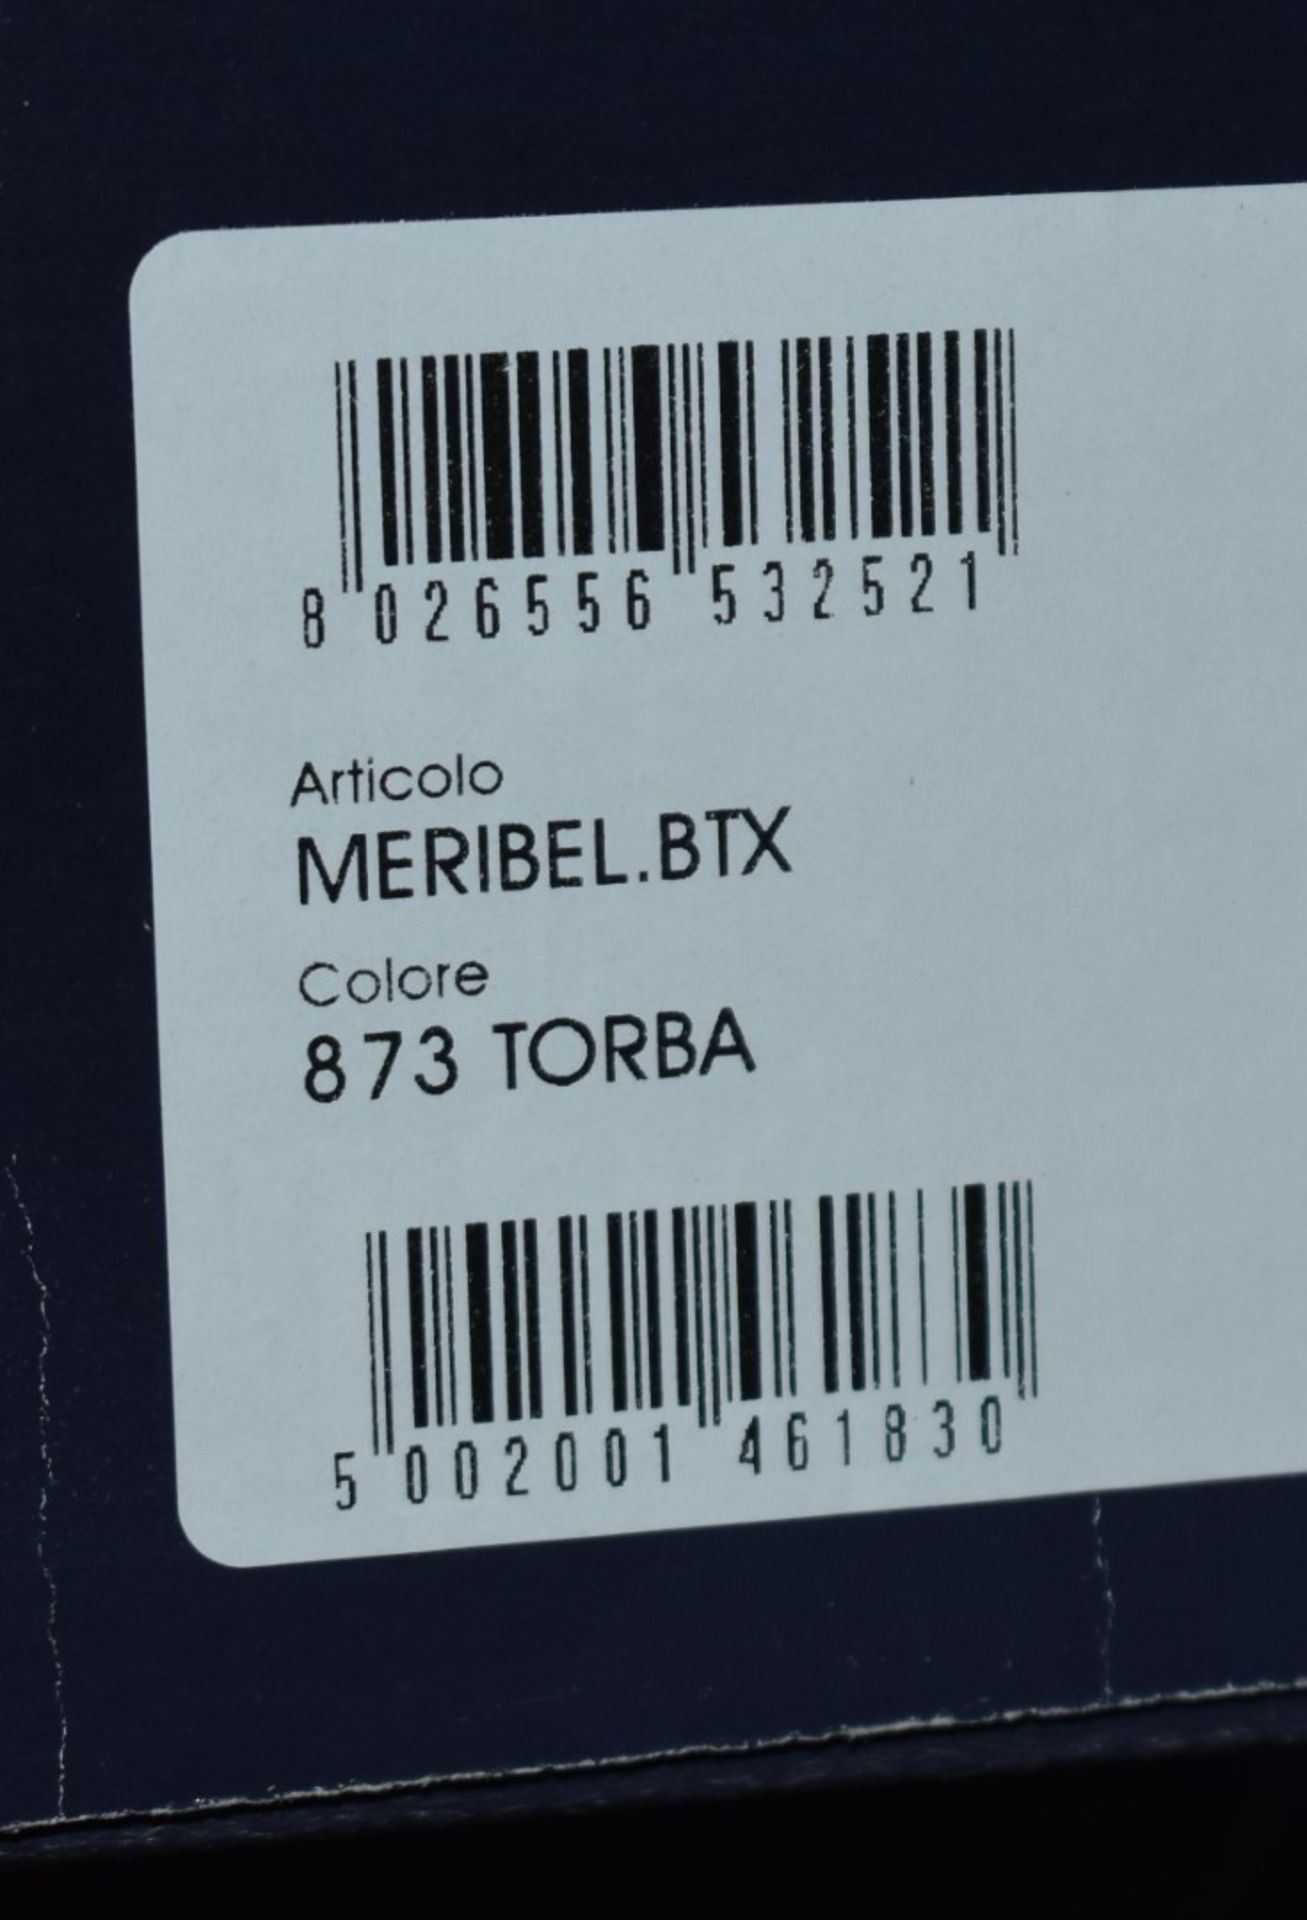 1 x Pair of Designer Olang Meribel 873 Torba Women's Winter Boots - Euro Size 41 - Brand New Boxed - Image 5 of 5